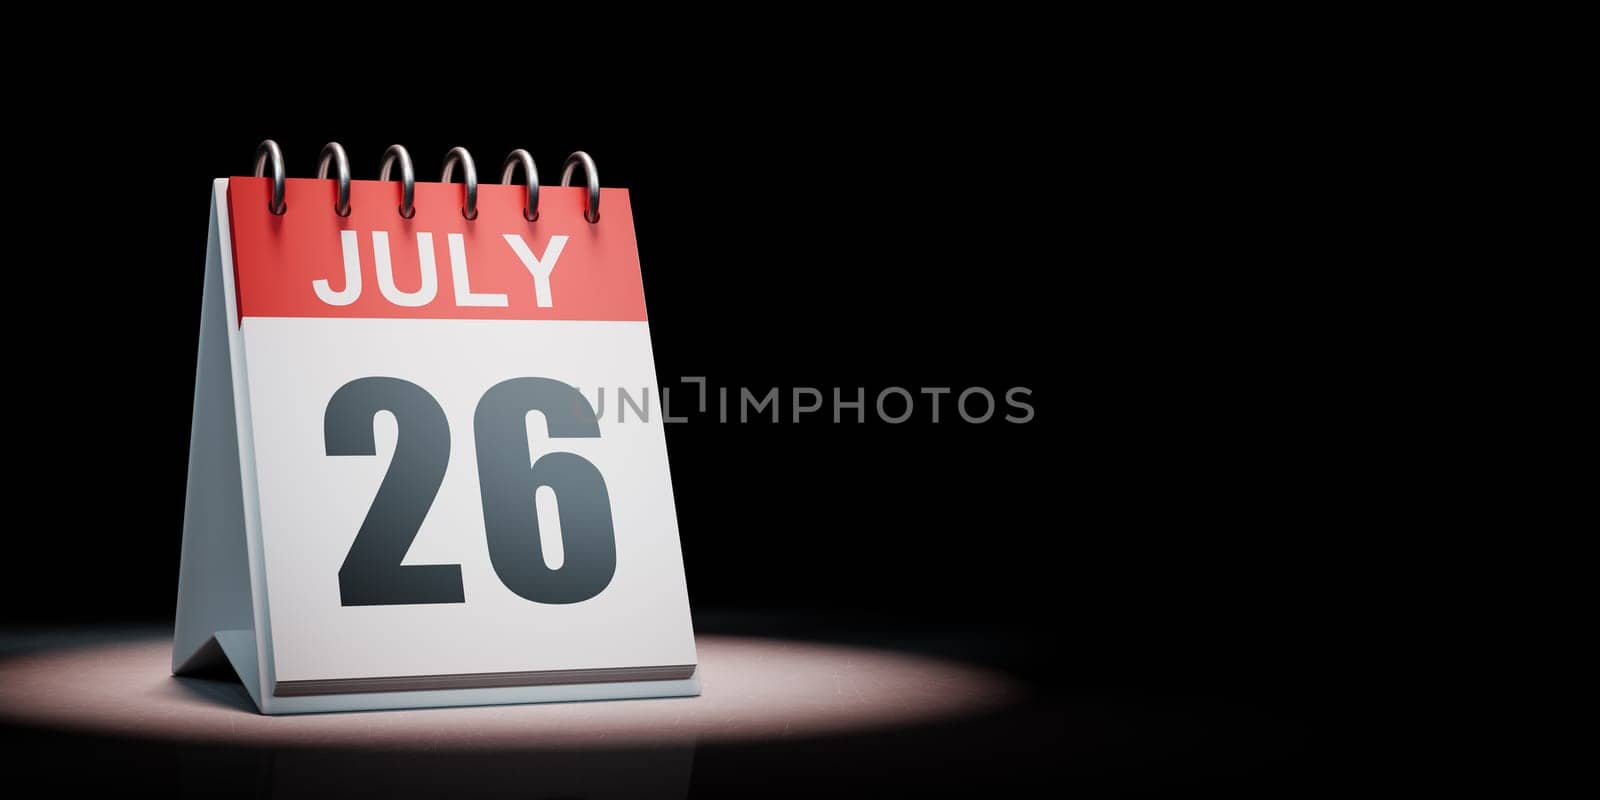 July 26 Calendar Spotlighted on Black Background by make